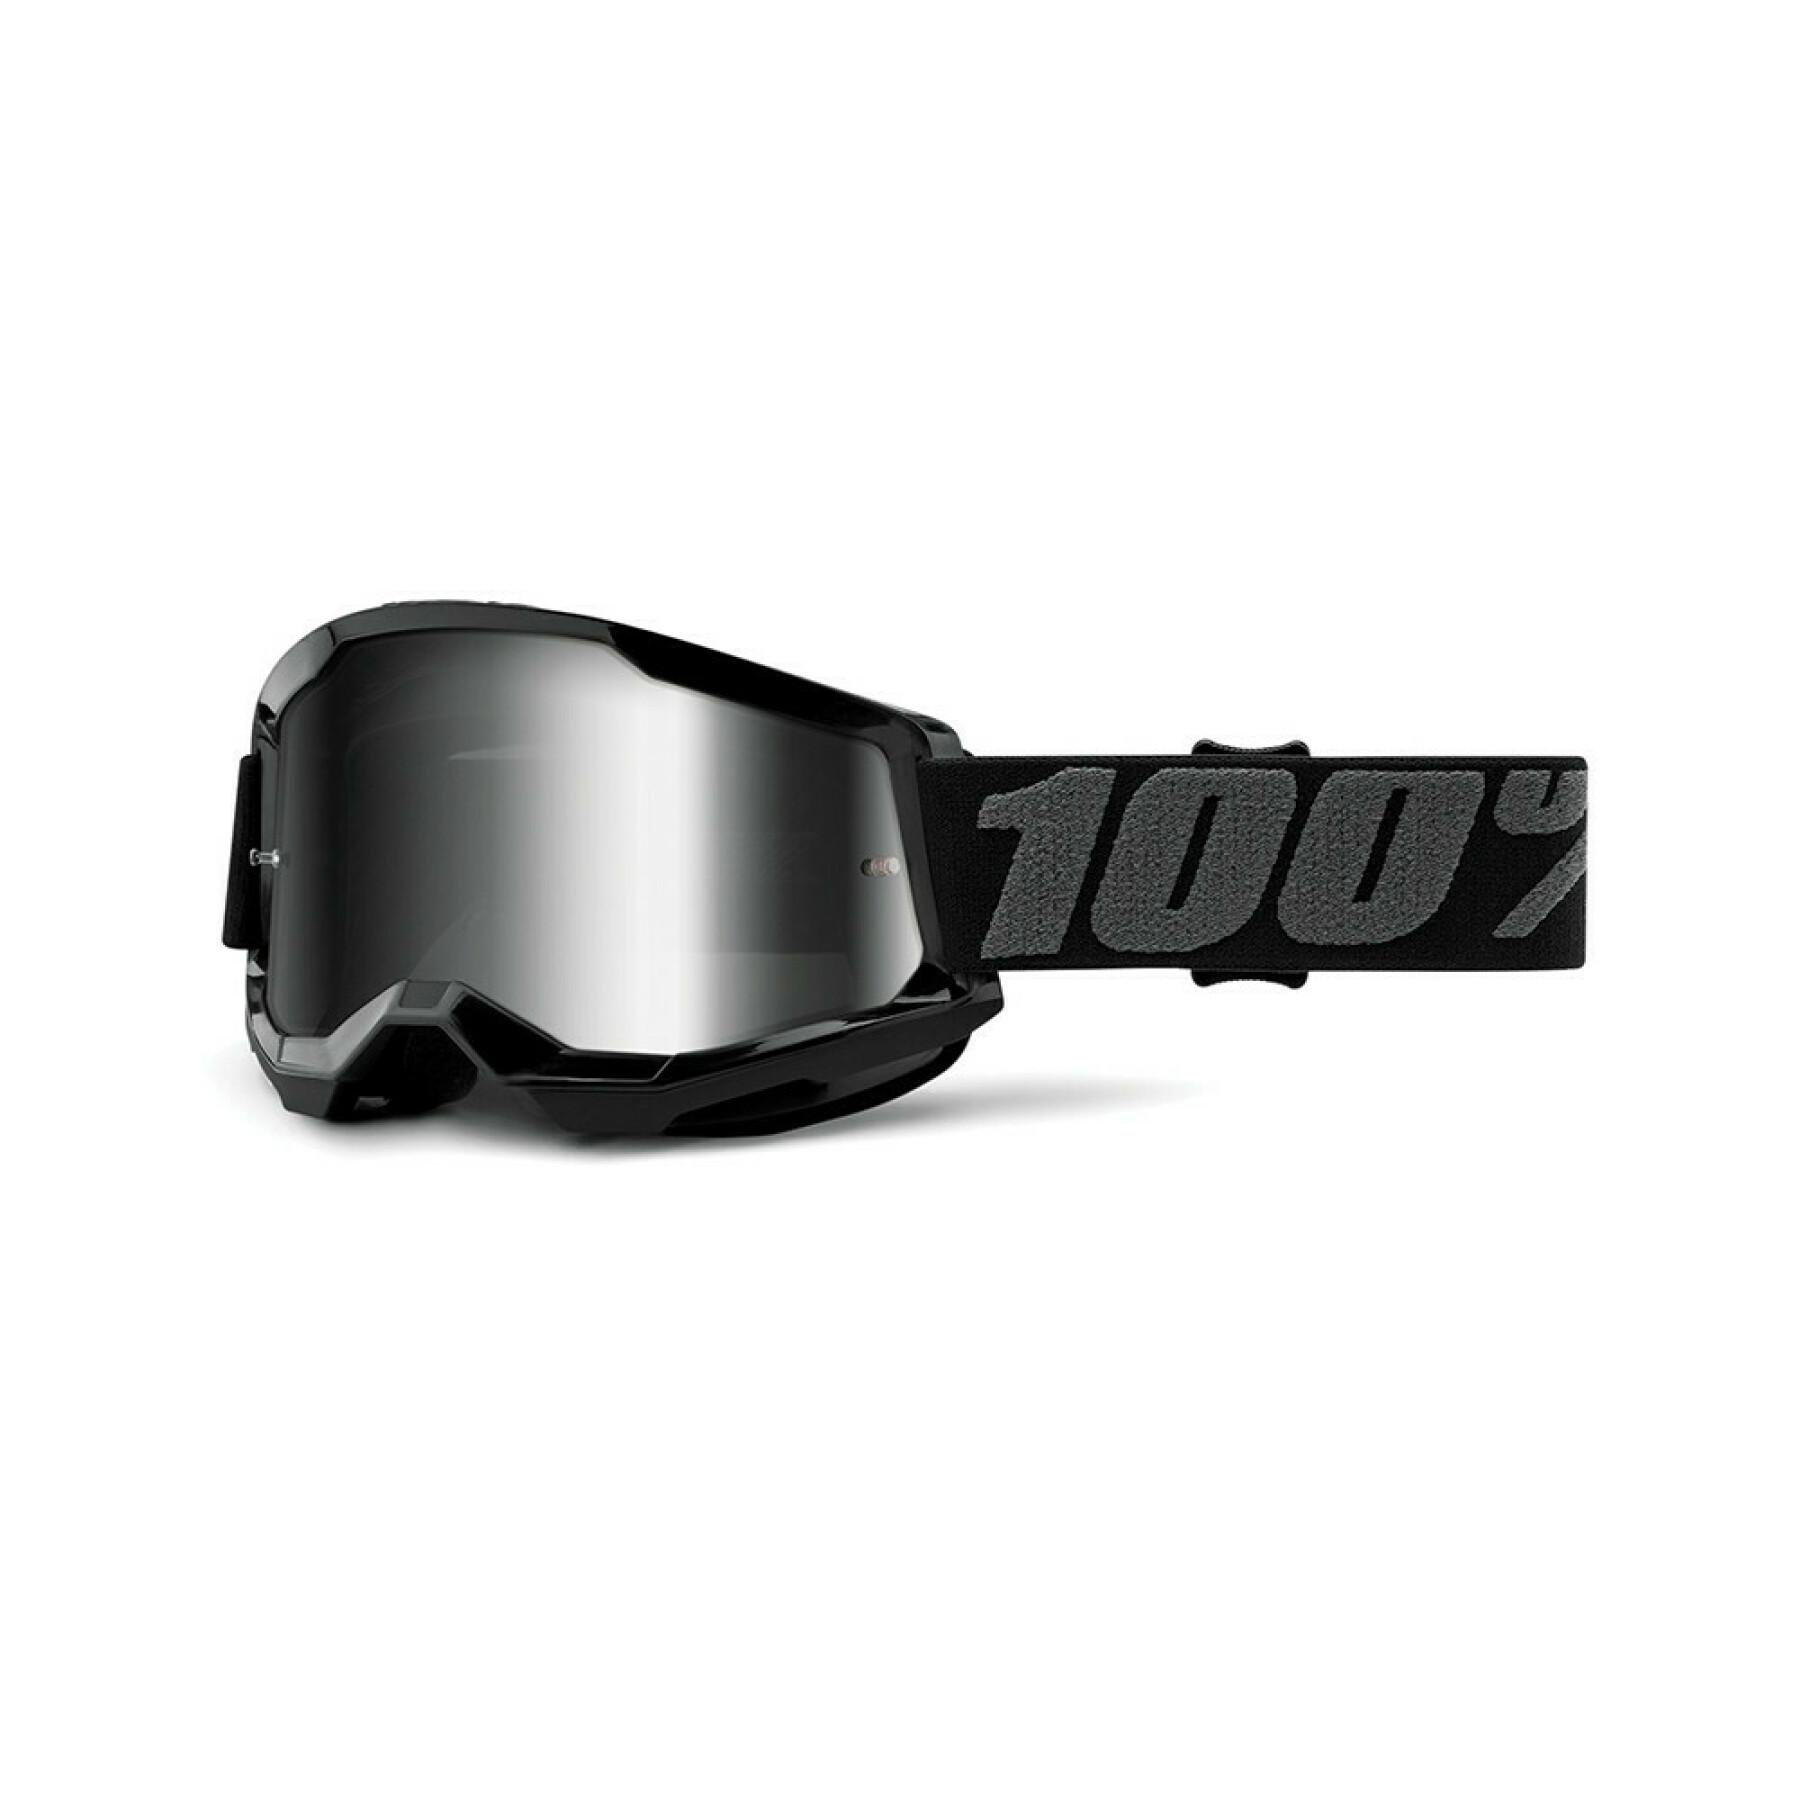 Tela iridium com máscara de motocicleta 100% Strata 2